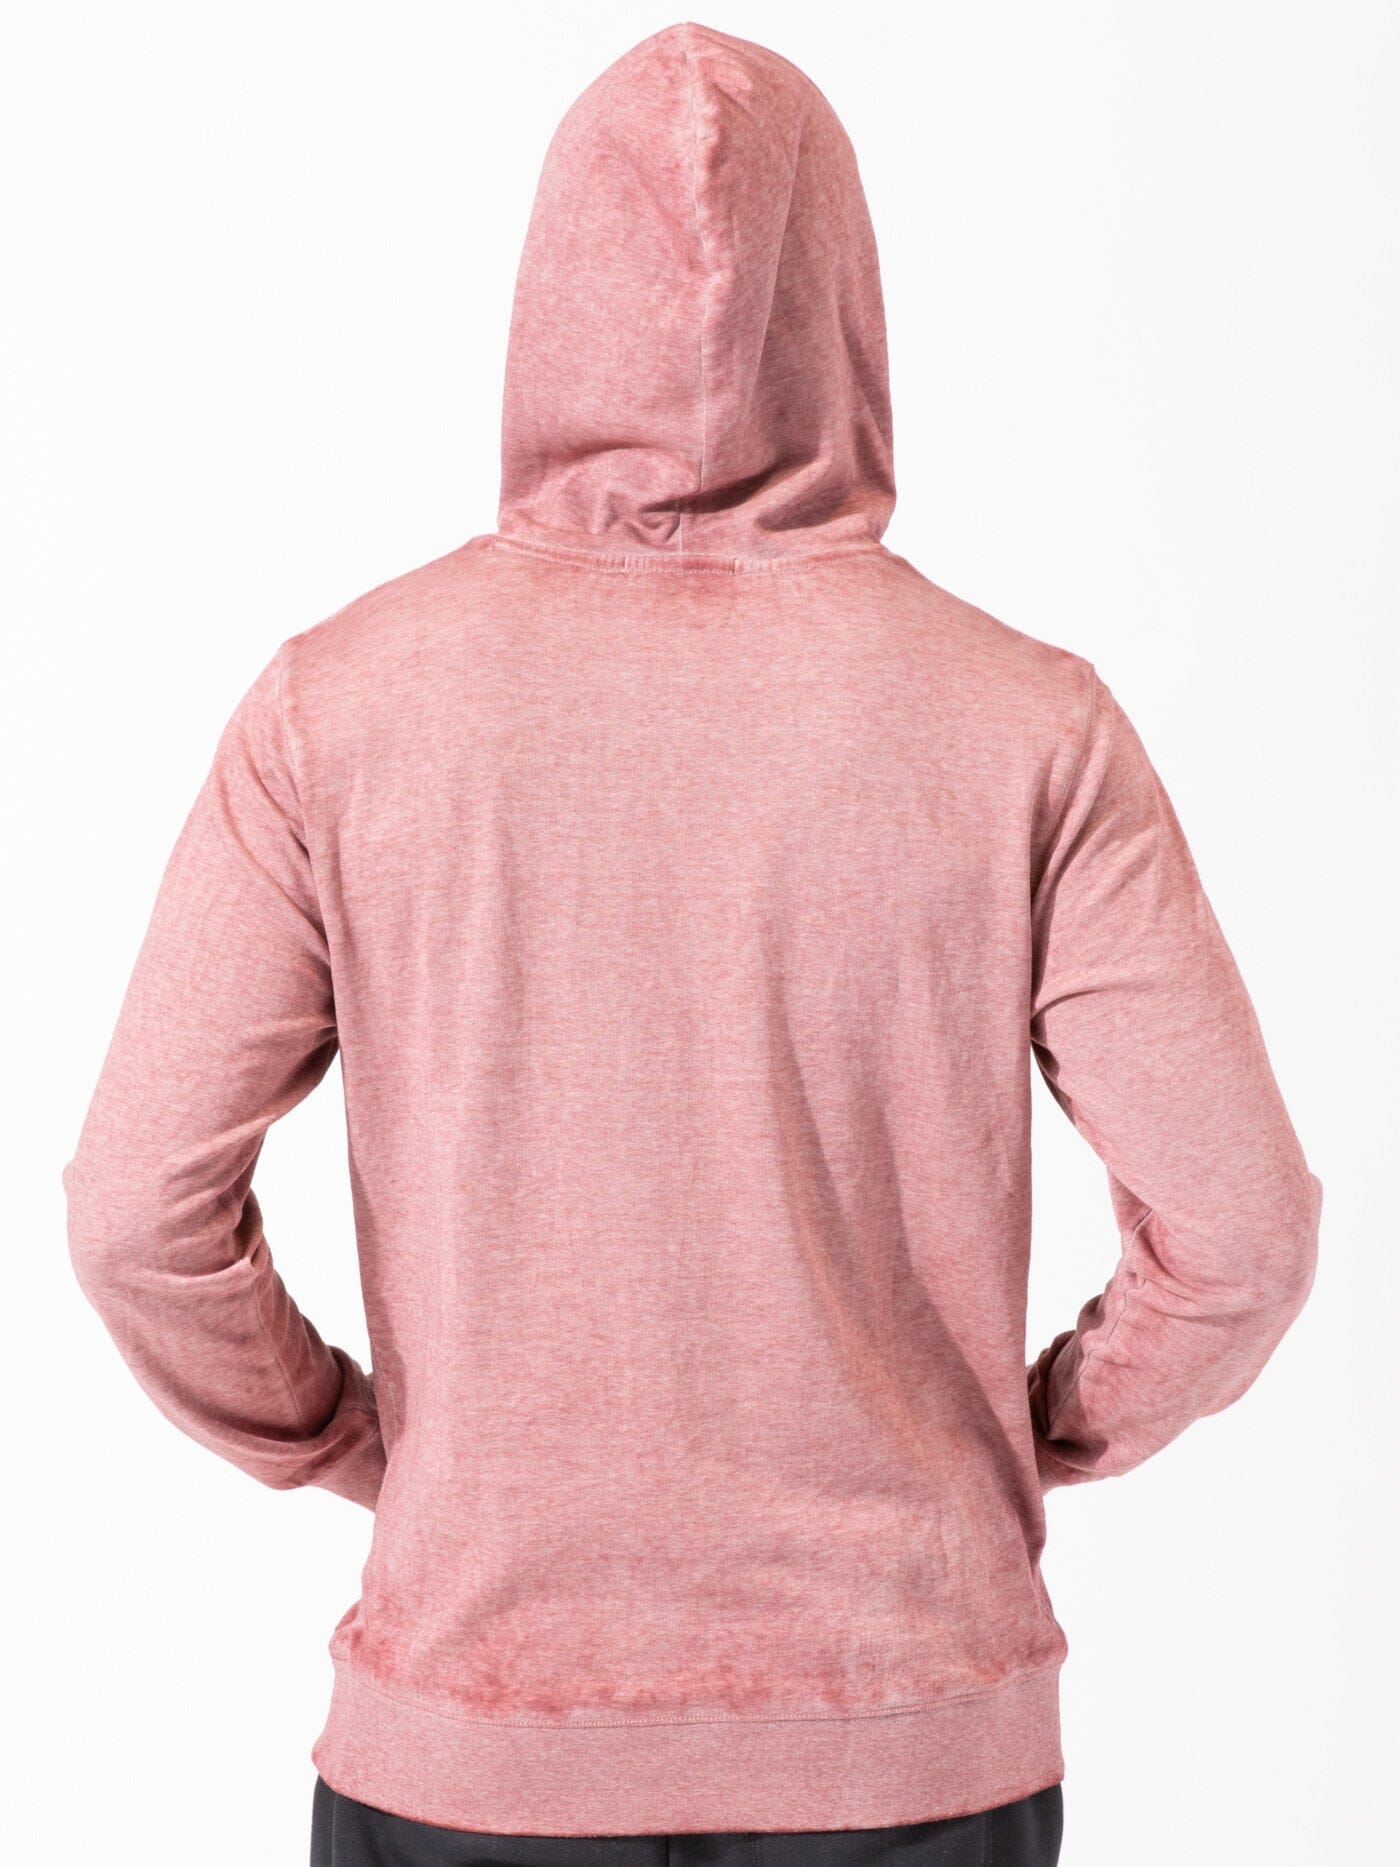 Burnout Fleece Pullover Hoodie Mens Outerwear Sweatshirt Threads 4 Thought 